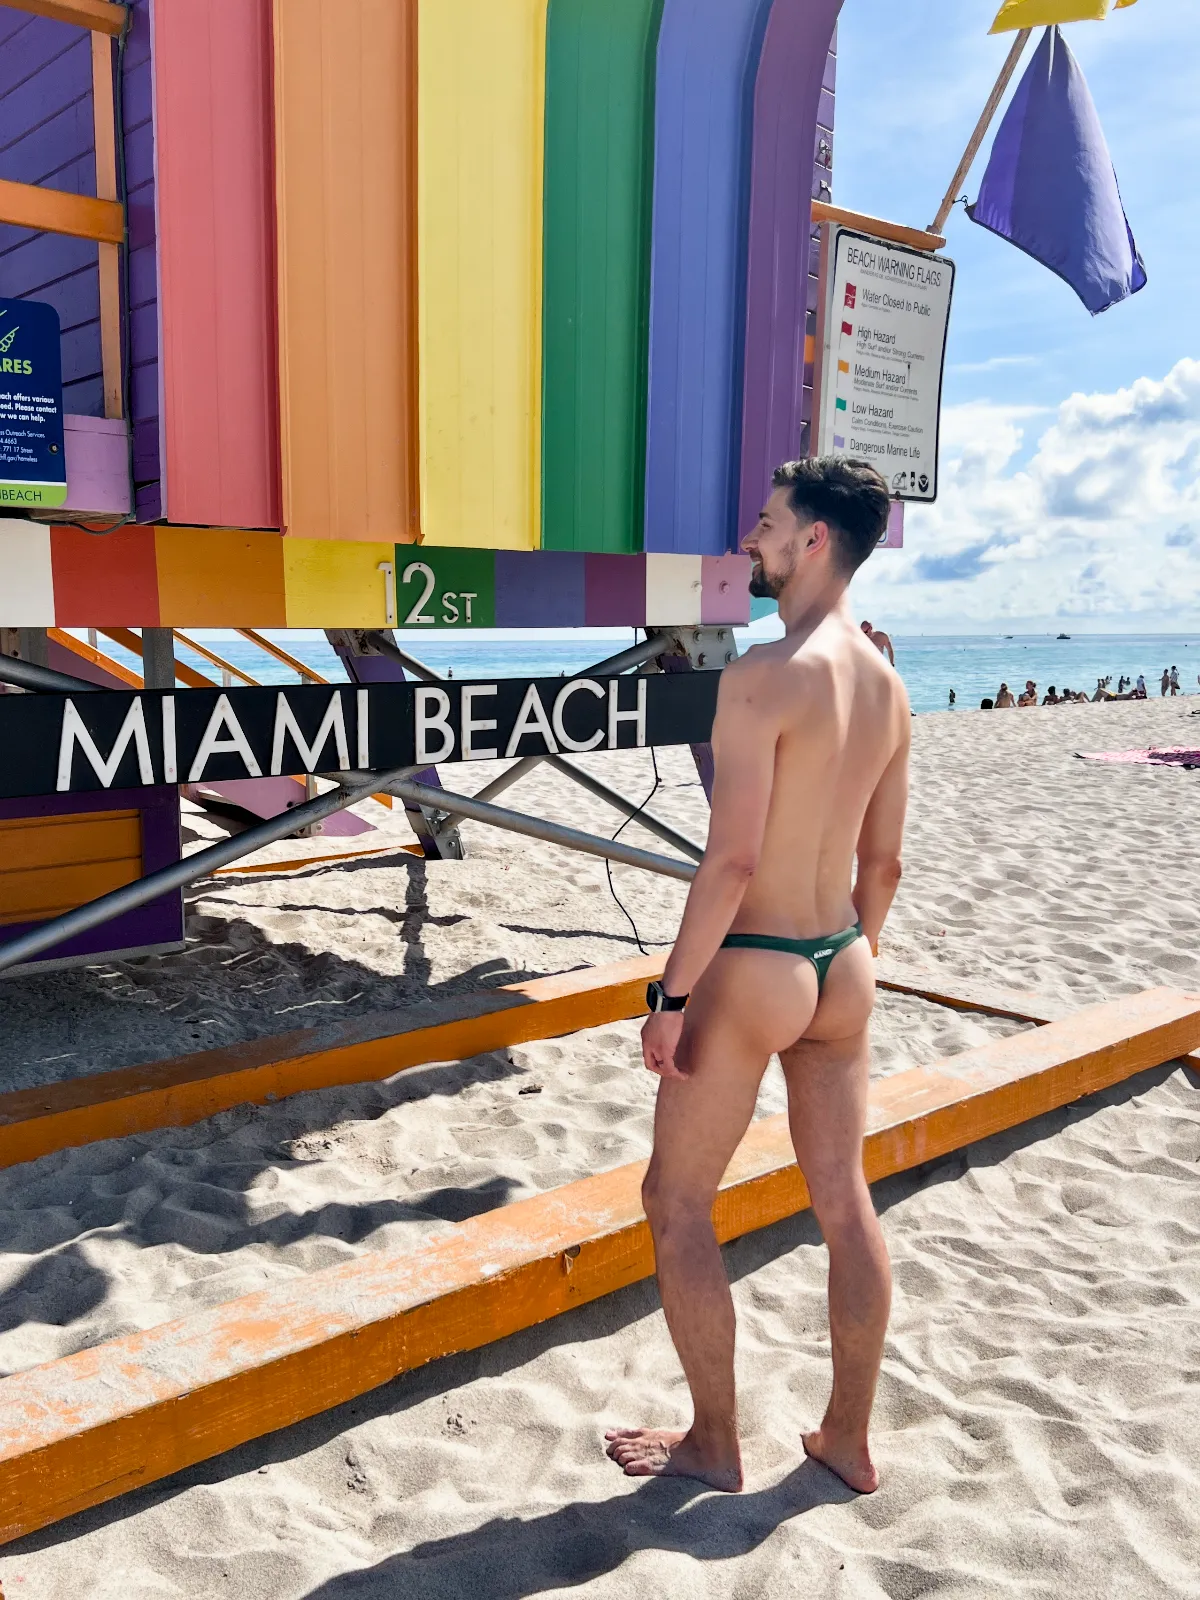 Jeremiah wearing a thong facing the rainbow striped lifeguard house